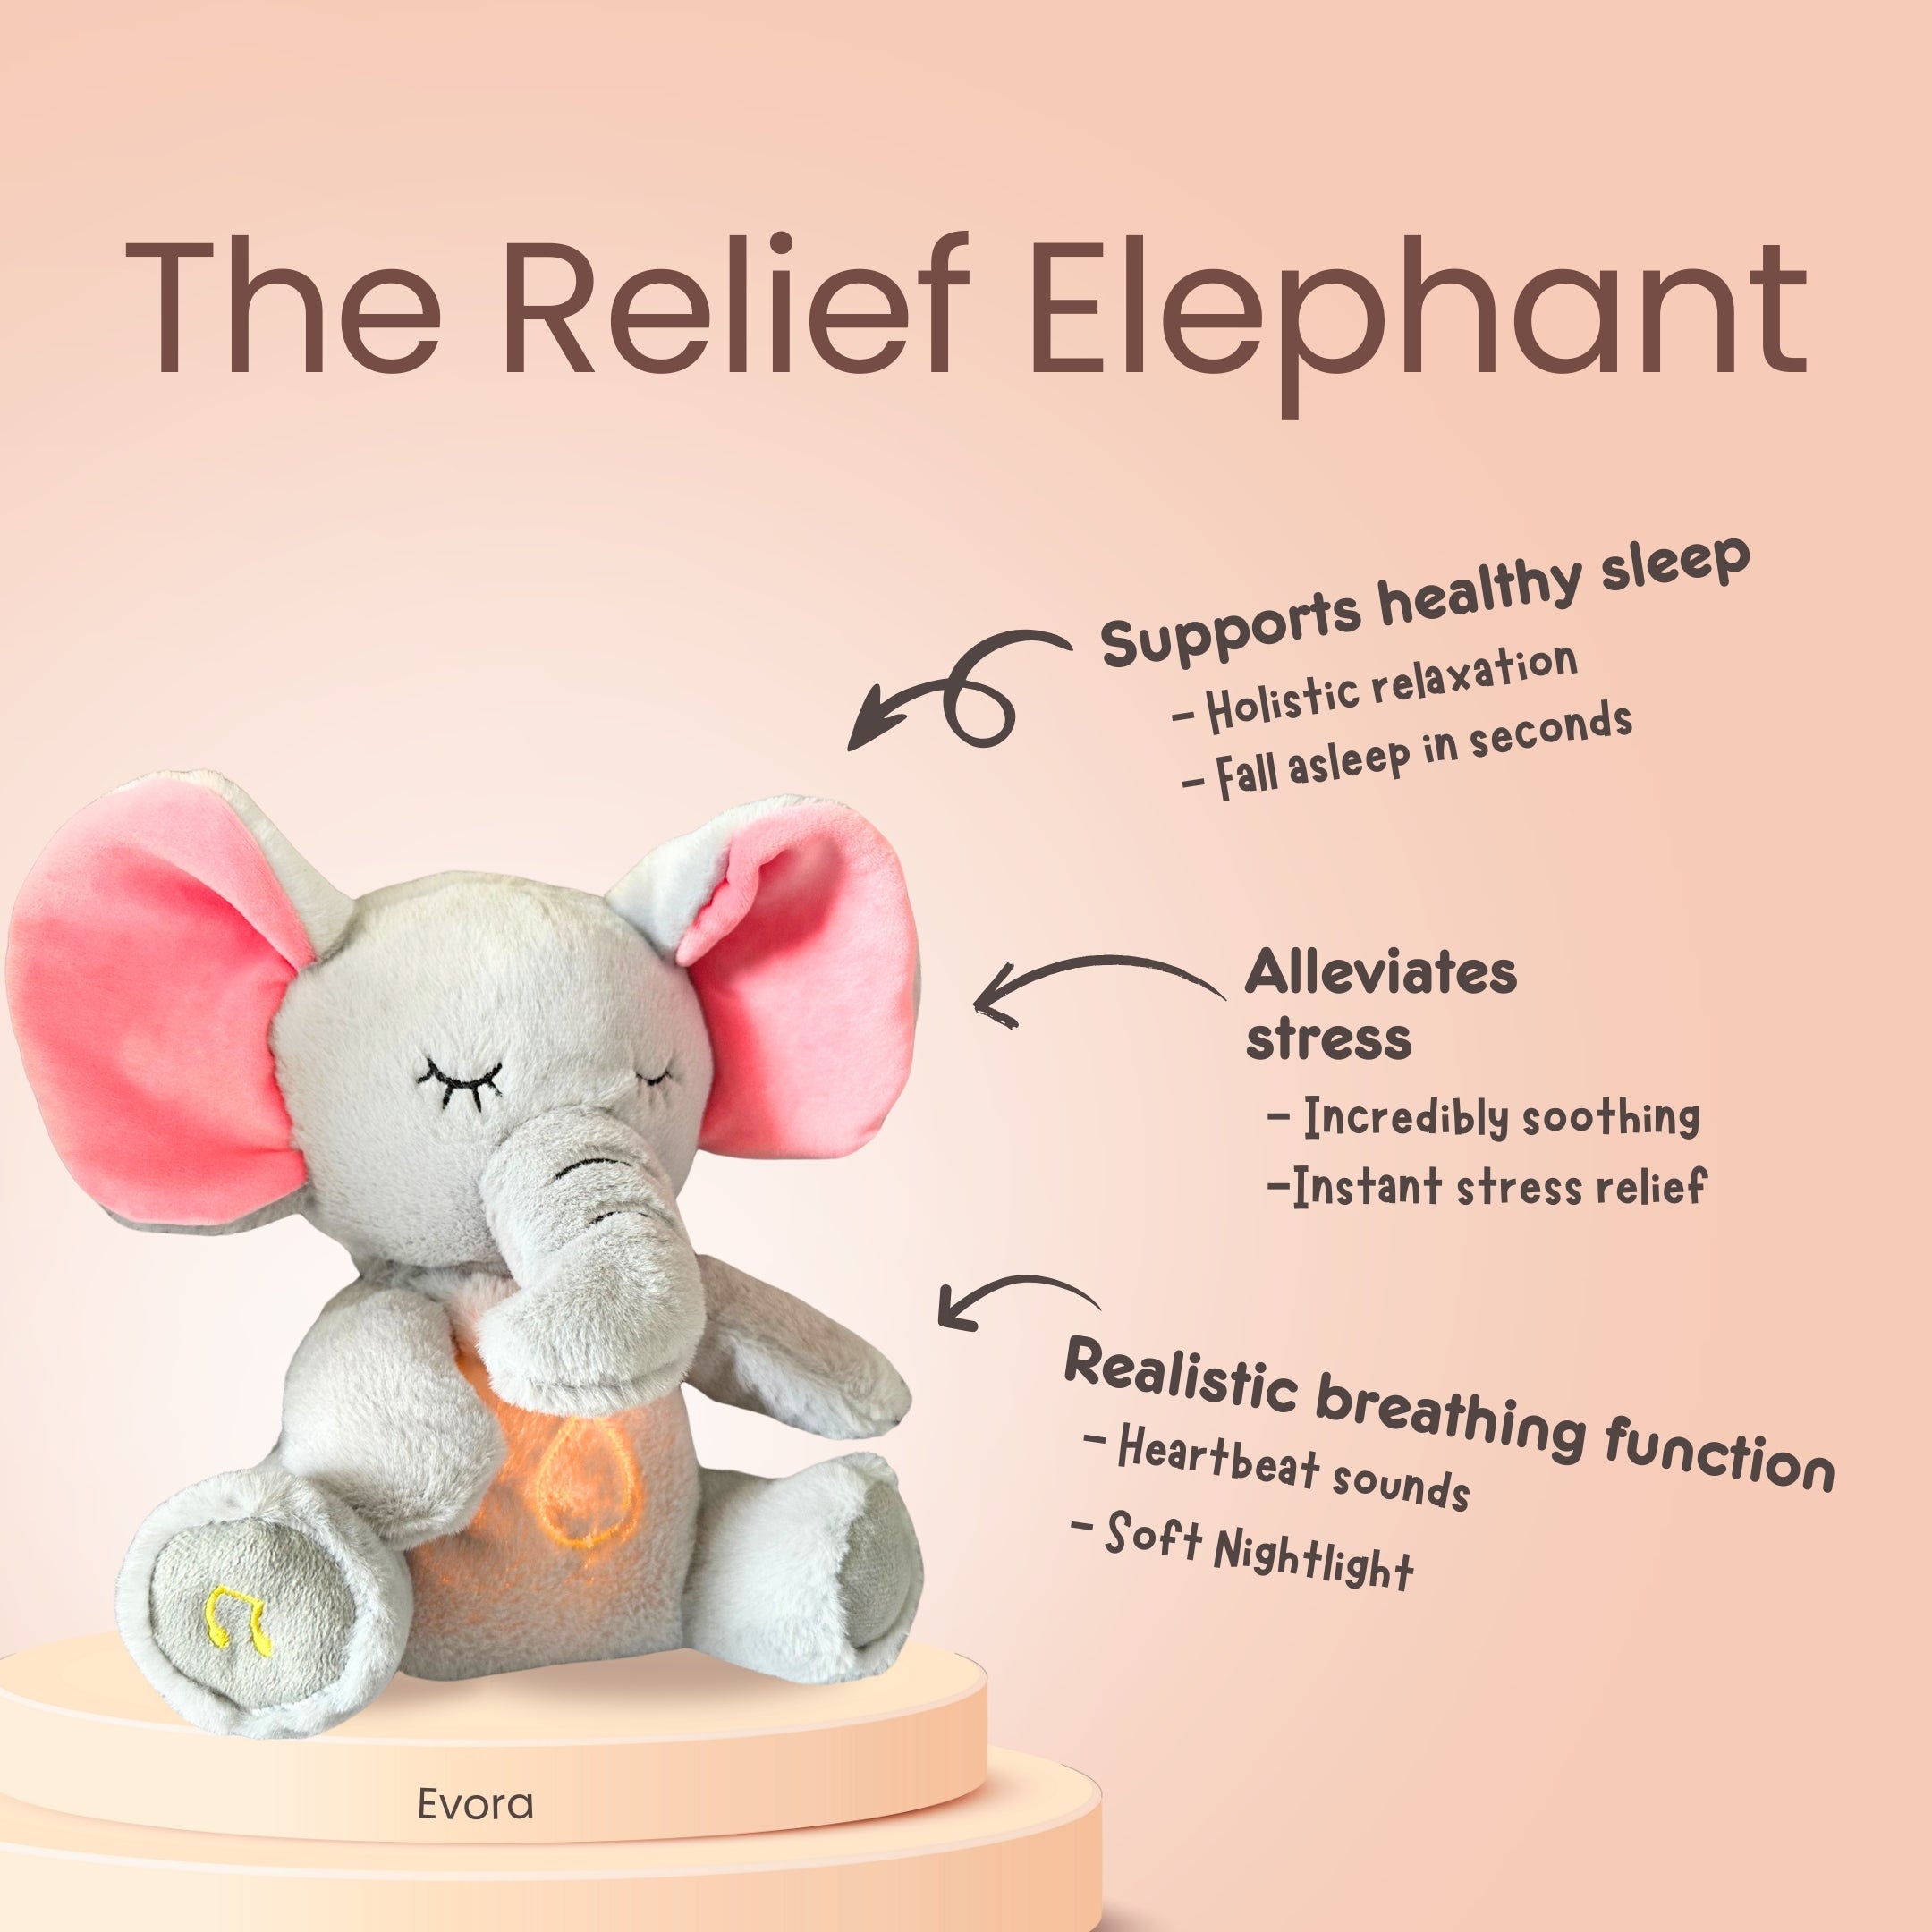 THE RELIEF ELEPHANT